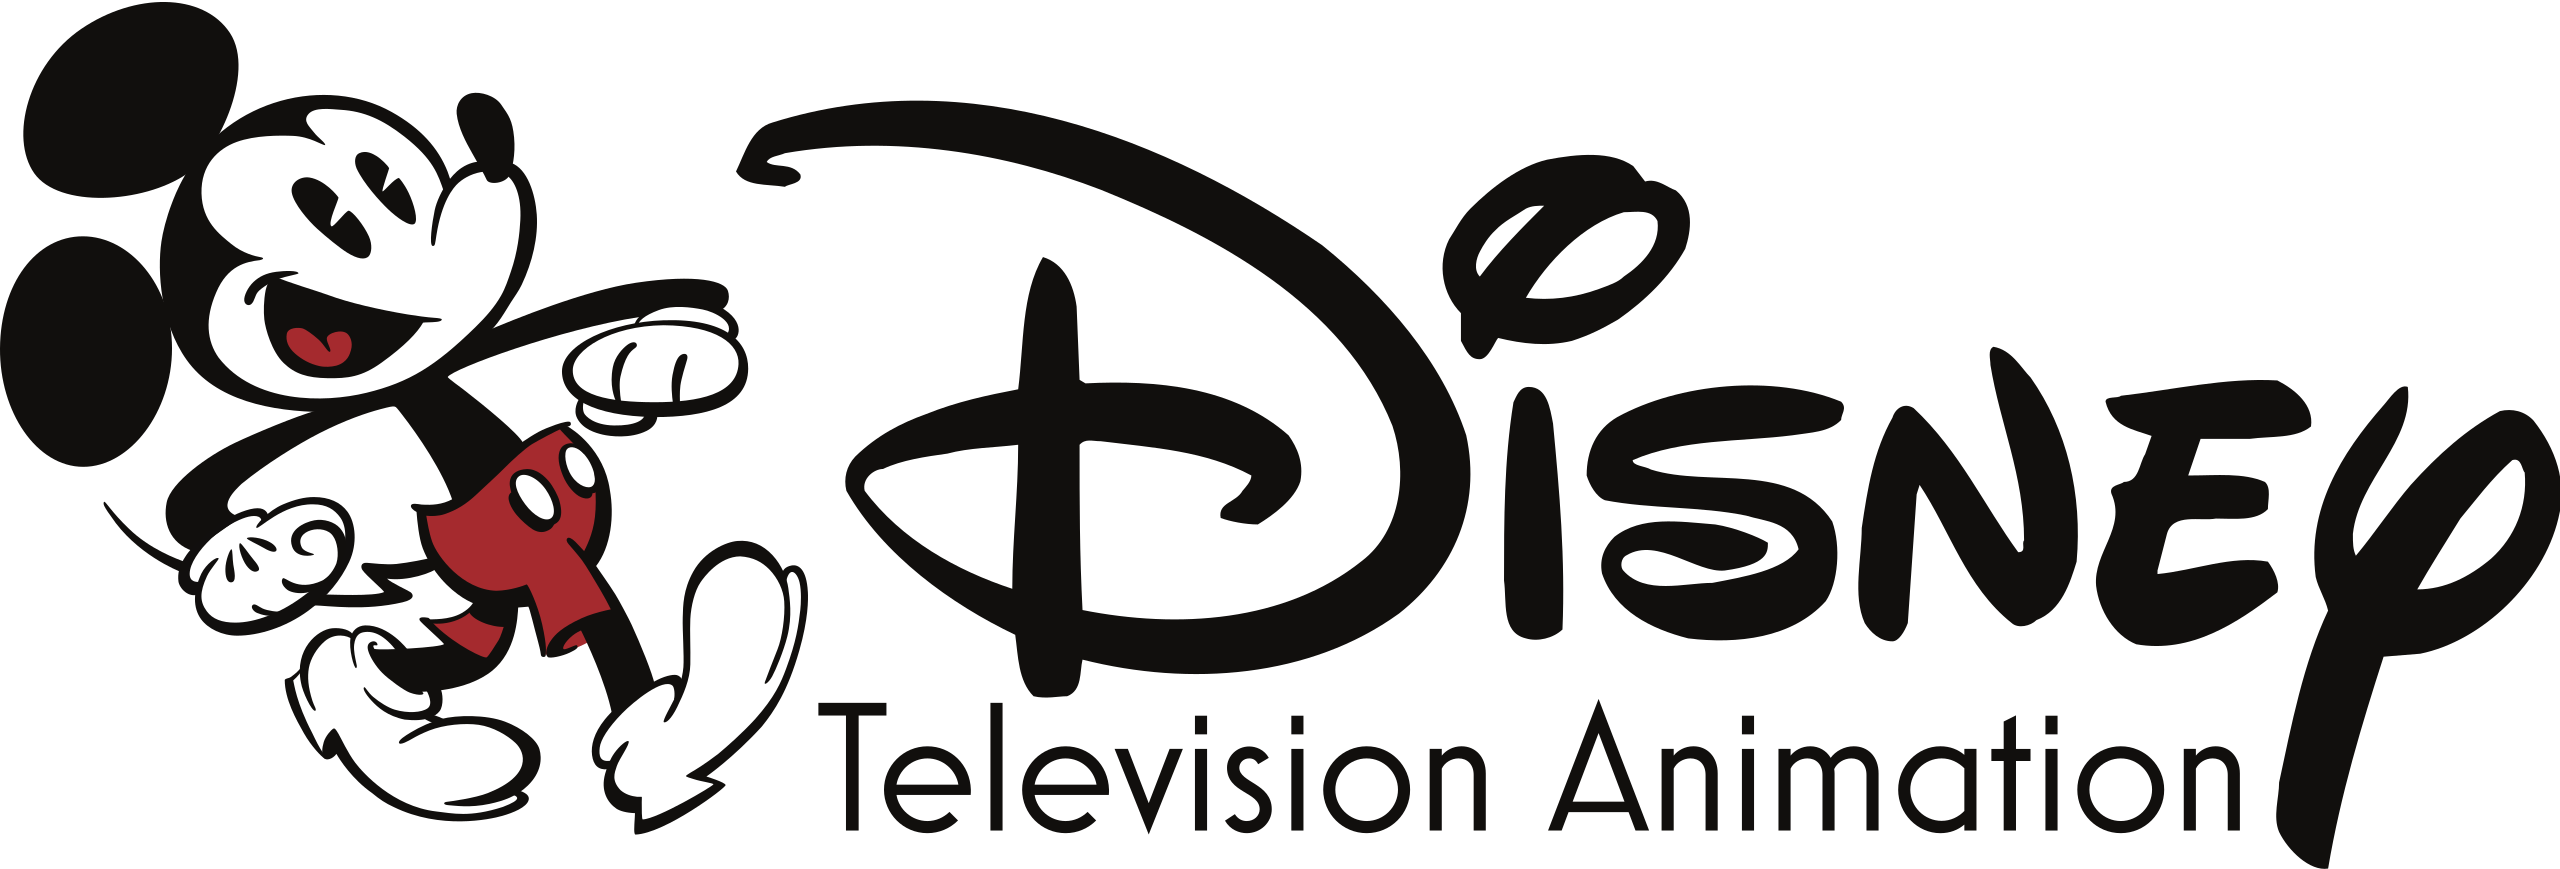 Several Disney Television Animation pilots